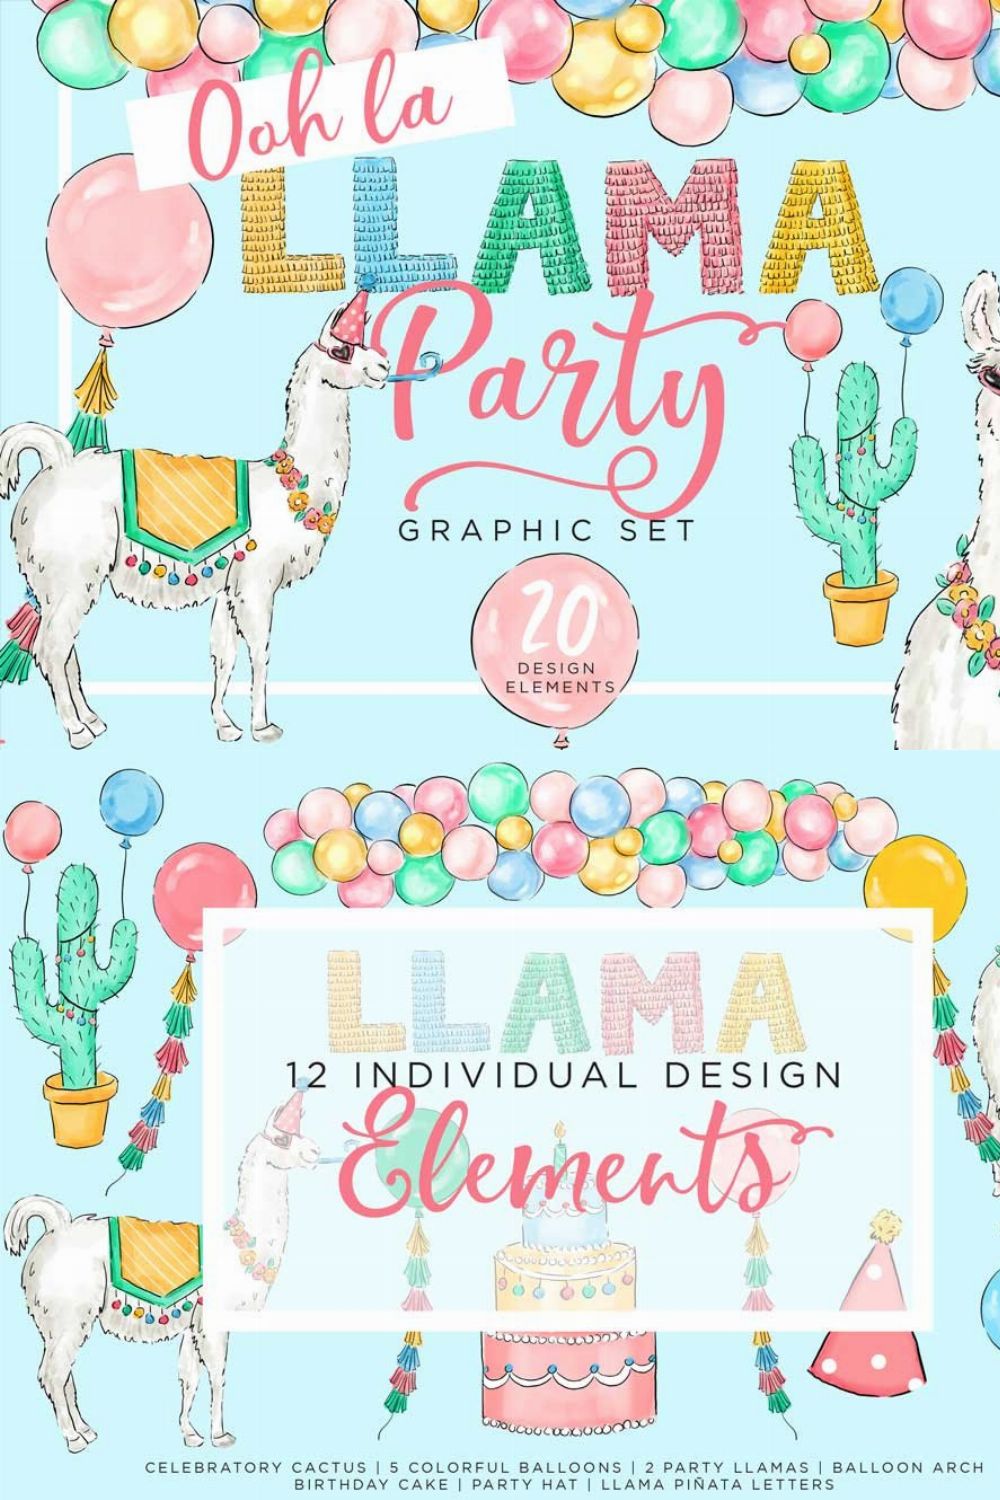 Llama Party Design Elements pinterest preview image.